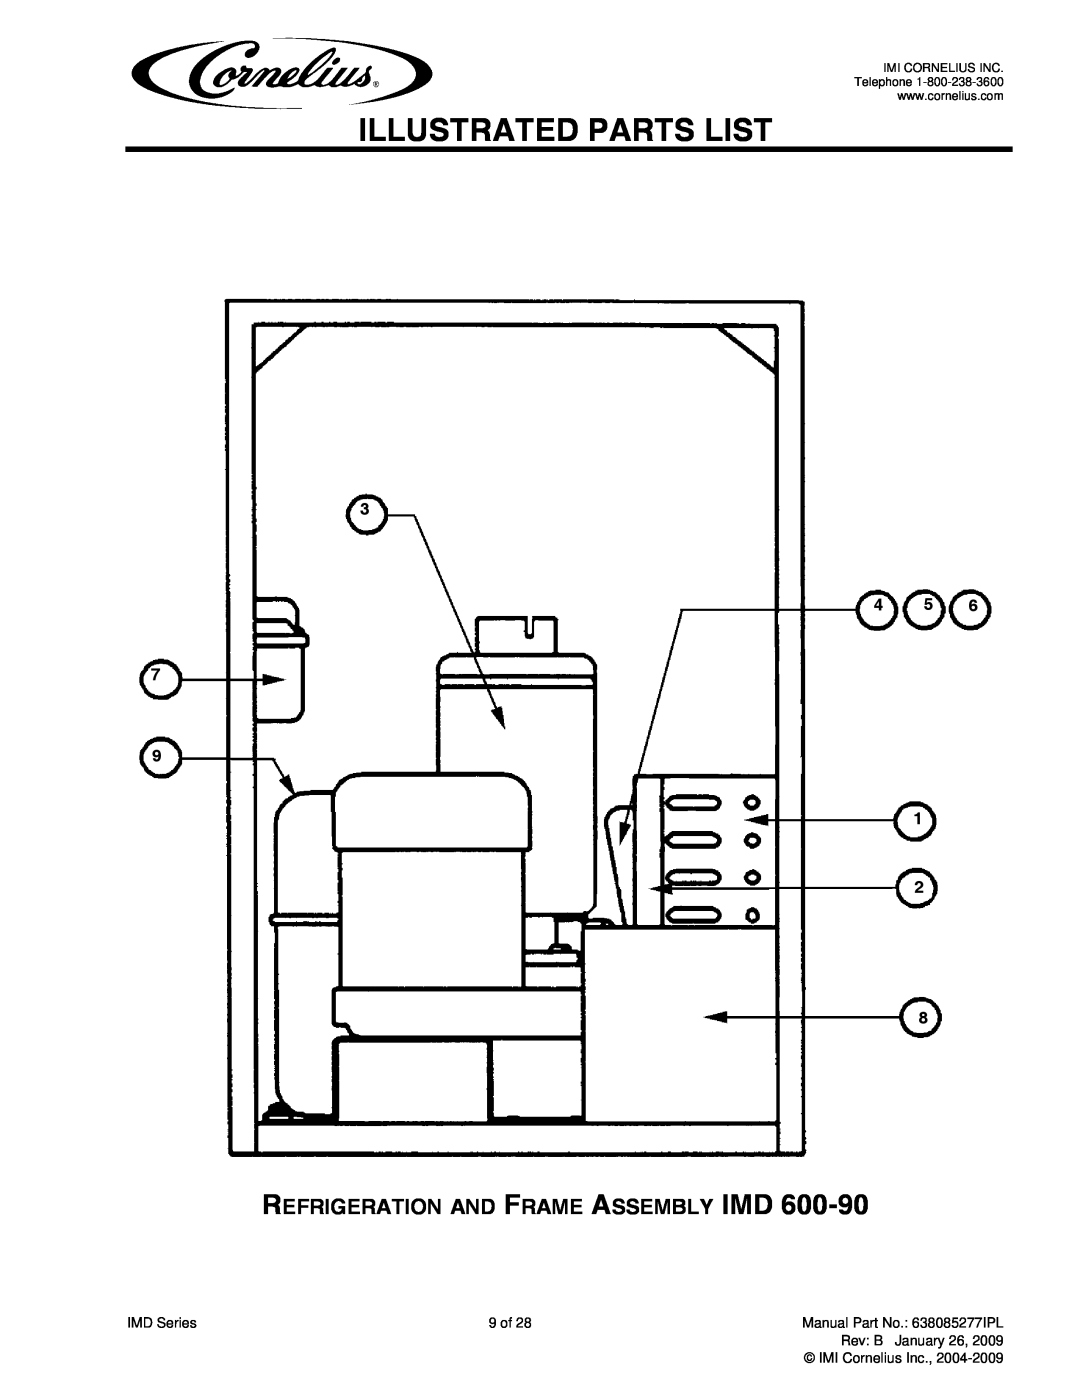 Cornelius IMD300-30, IMD600-30, IMD600-90, IMD300-15 manual Illustrated Parts List, Refrigeration And Frame Assembly Imd 